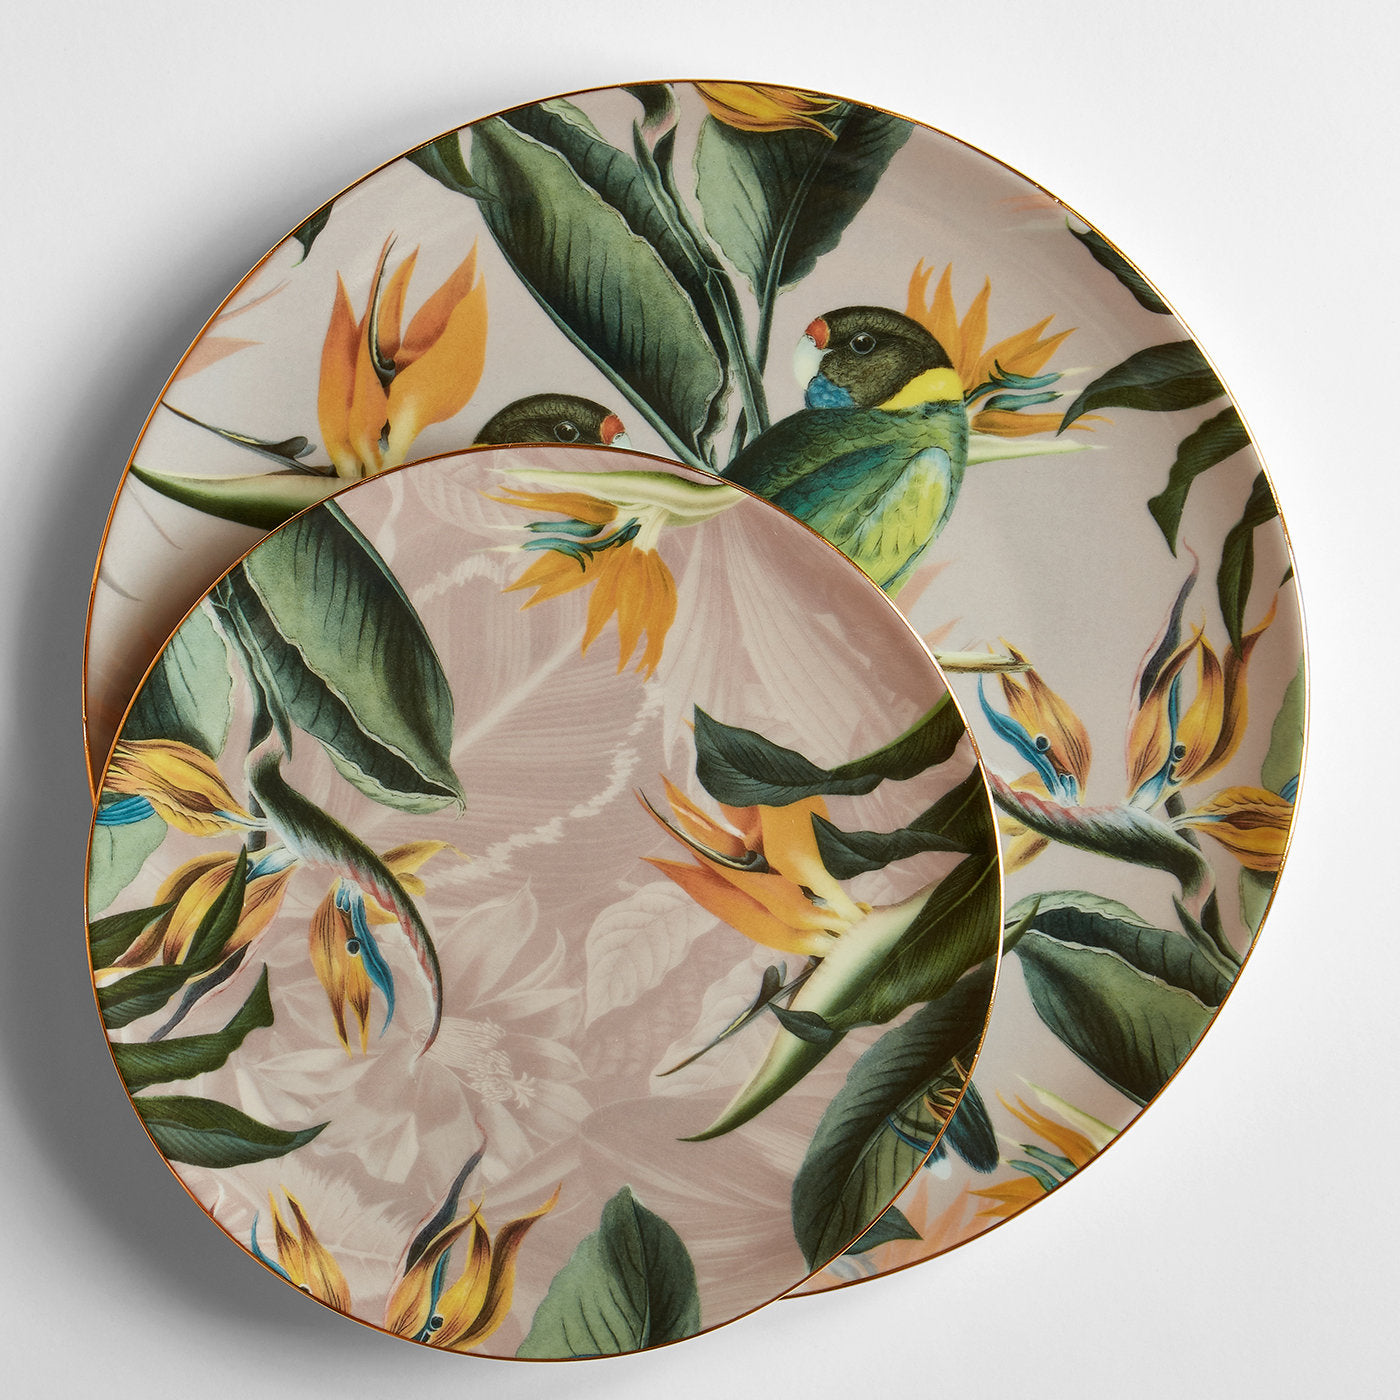 Animalia Porcelain Dinner Plate With Parrots And Strelitzias - Alternative view 1